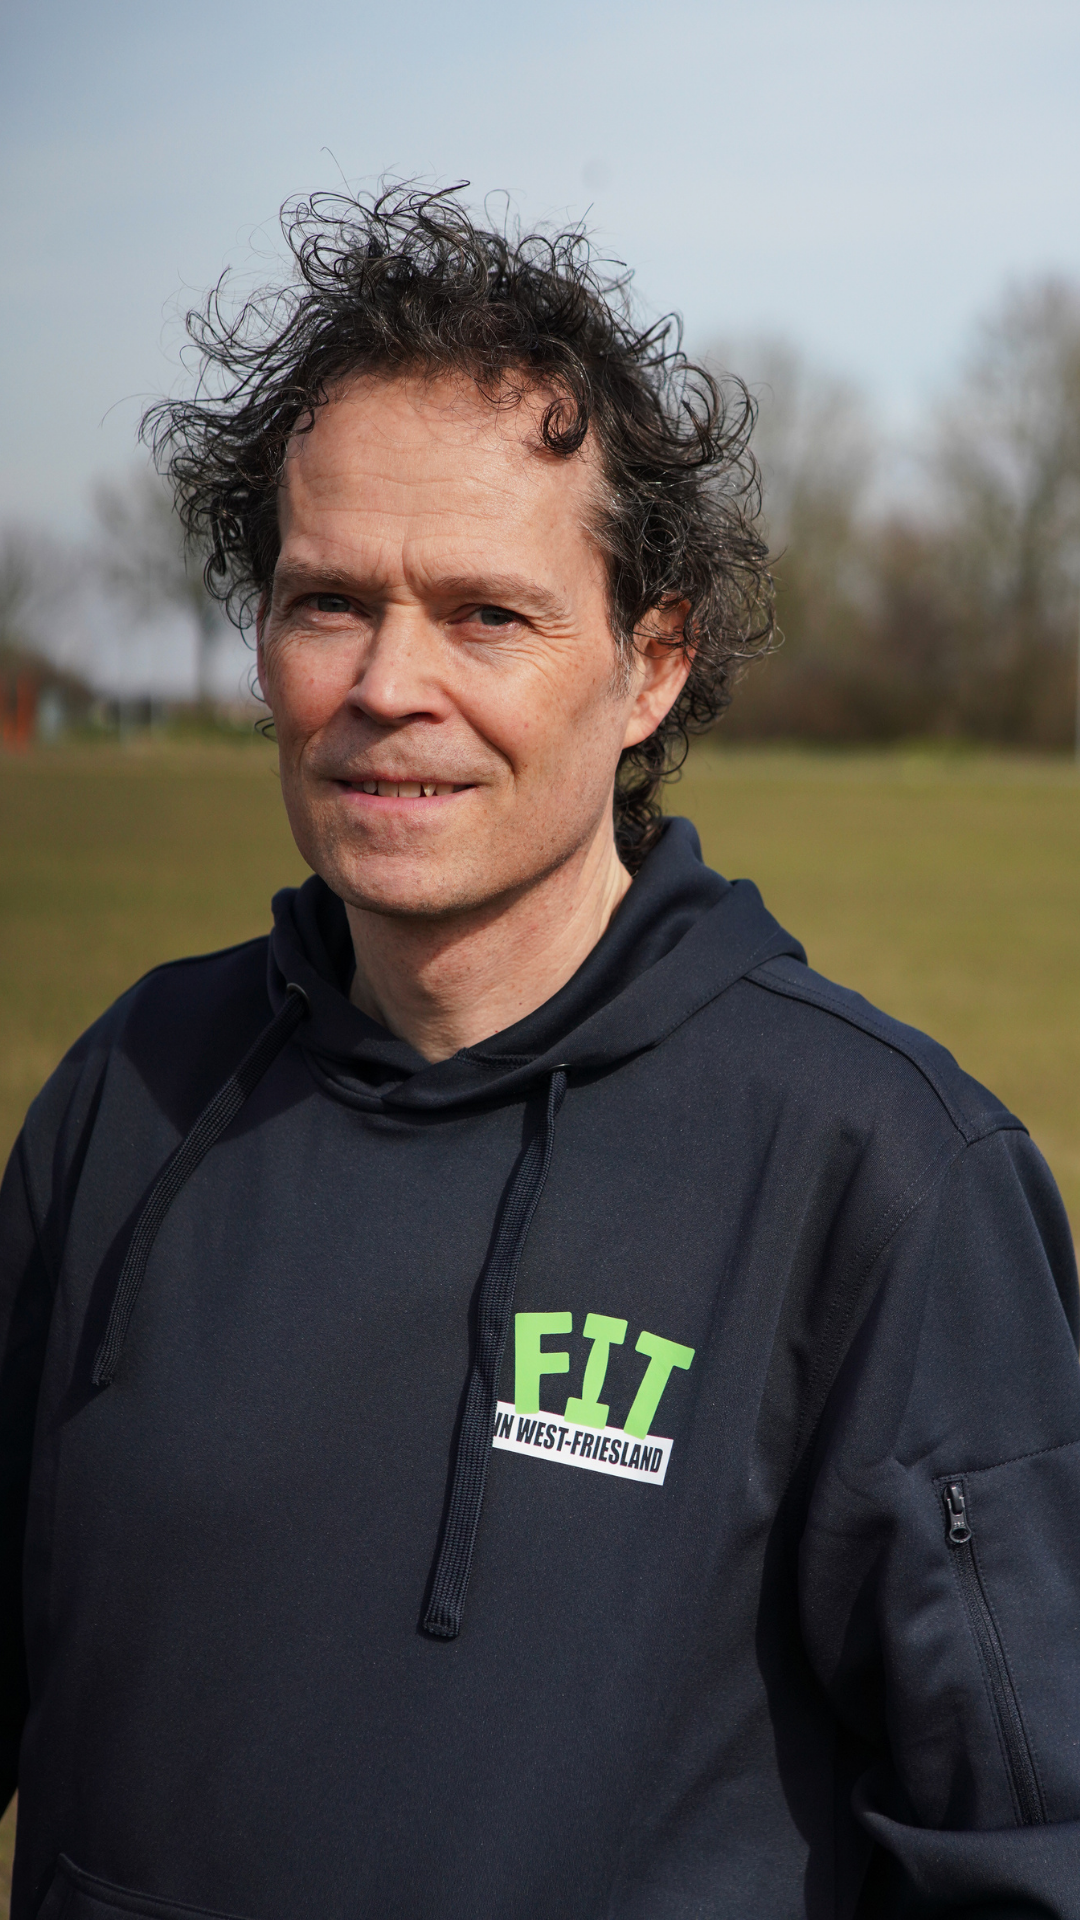 FIT in West-Friesland trainer Marco Jong